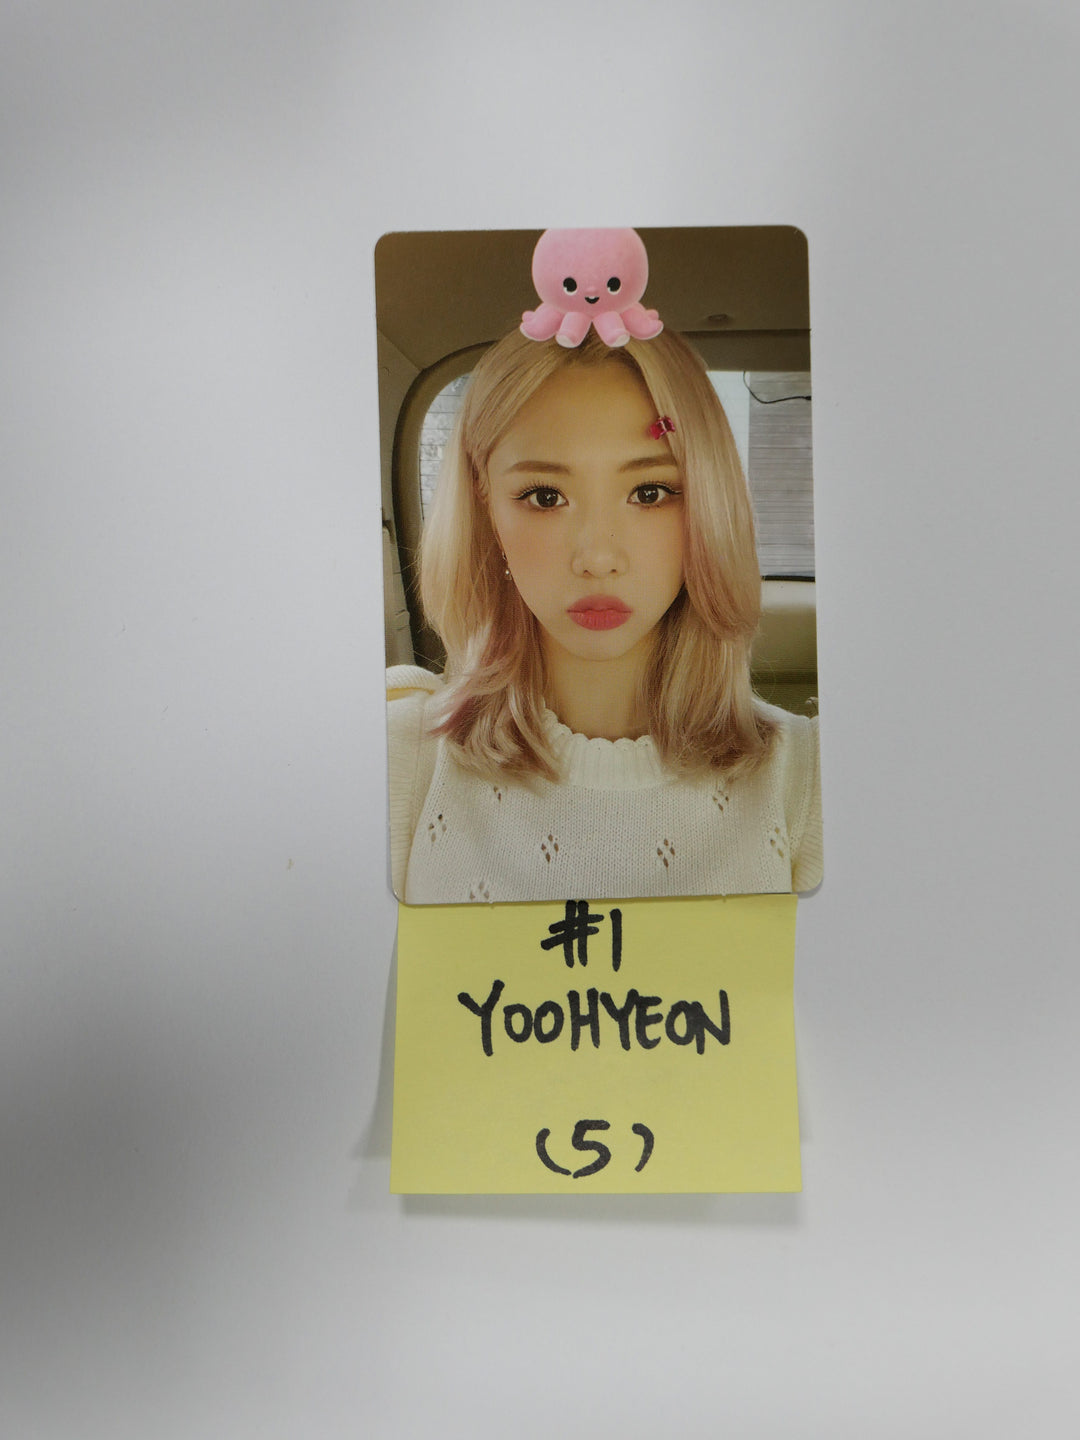 Dreamcatcher "Summer Holiday" - Official Photocard (Handong, Yoohyeon, Dami, Gahyeon)